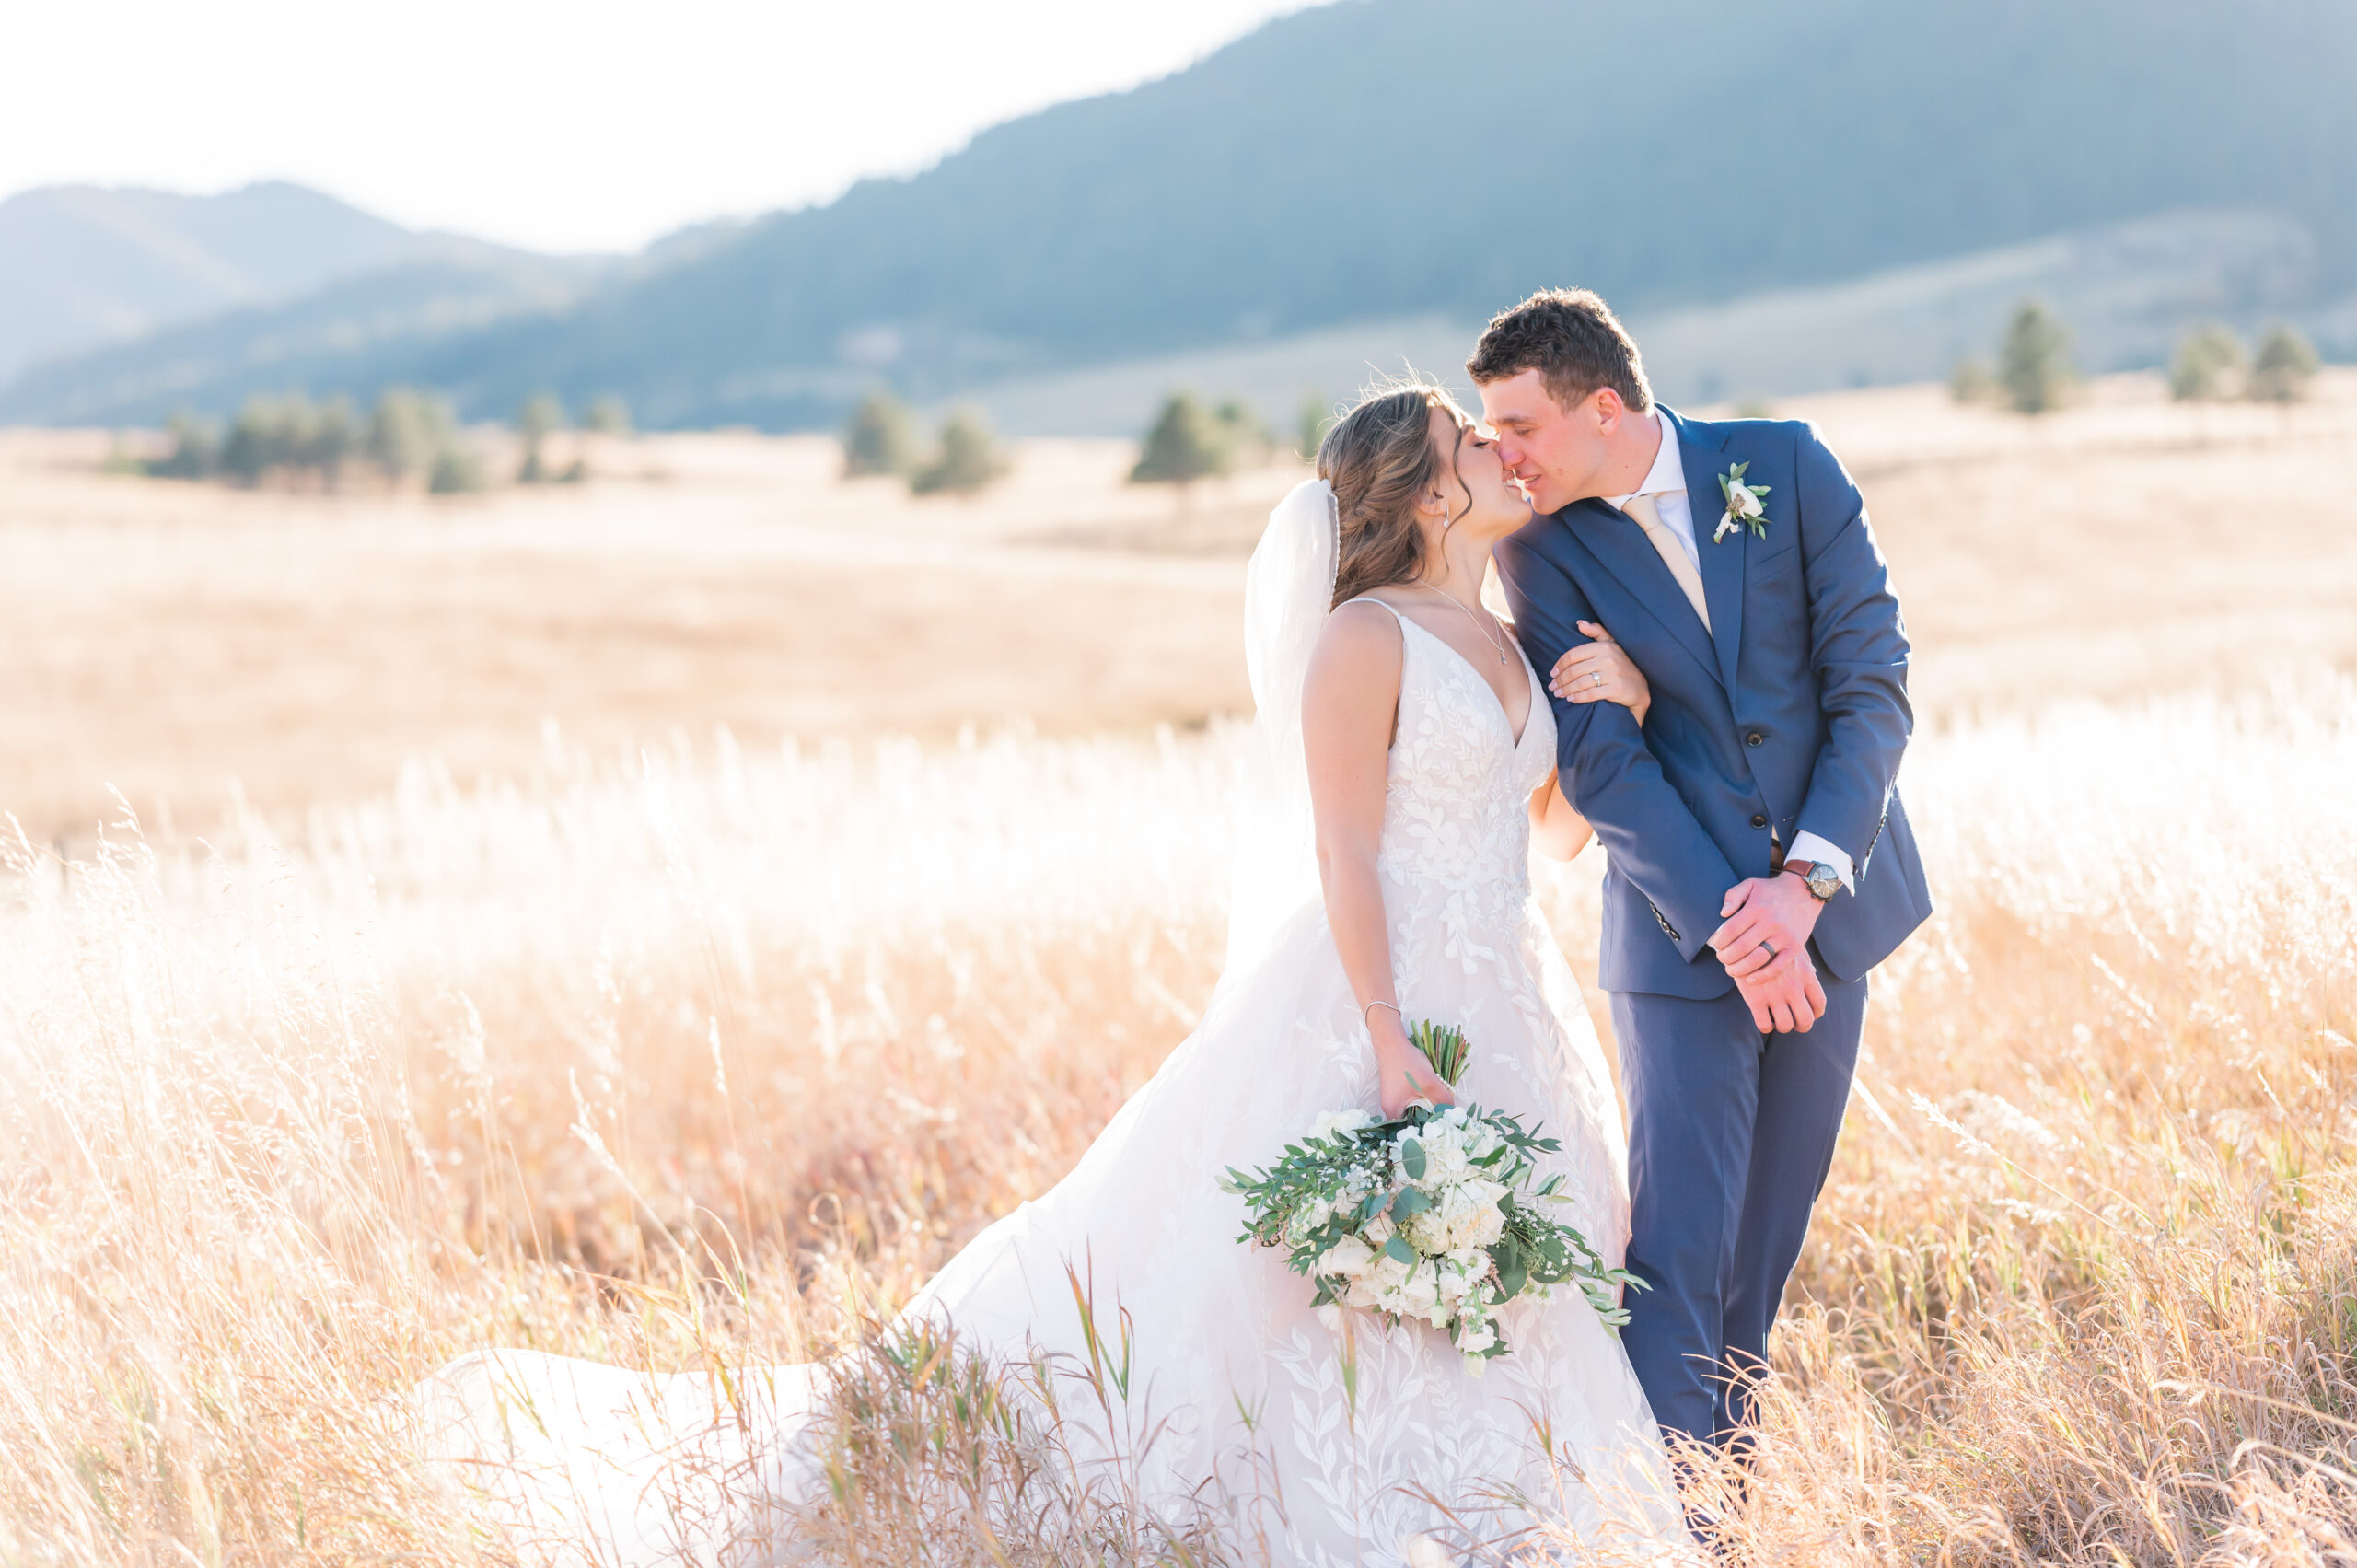 Elegant Wedding at Spruce Mountain in Larkspur - Britni Girard Photography - Colorado Destination Wedding Photographer and Videographer